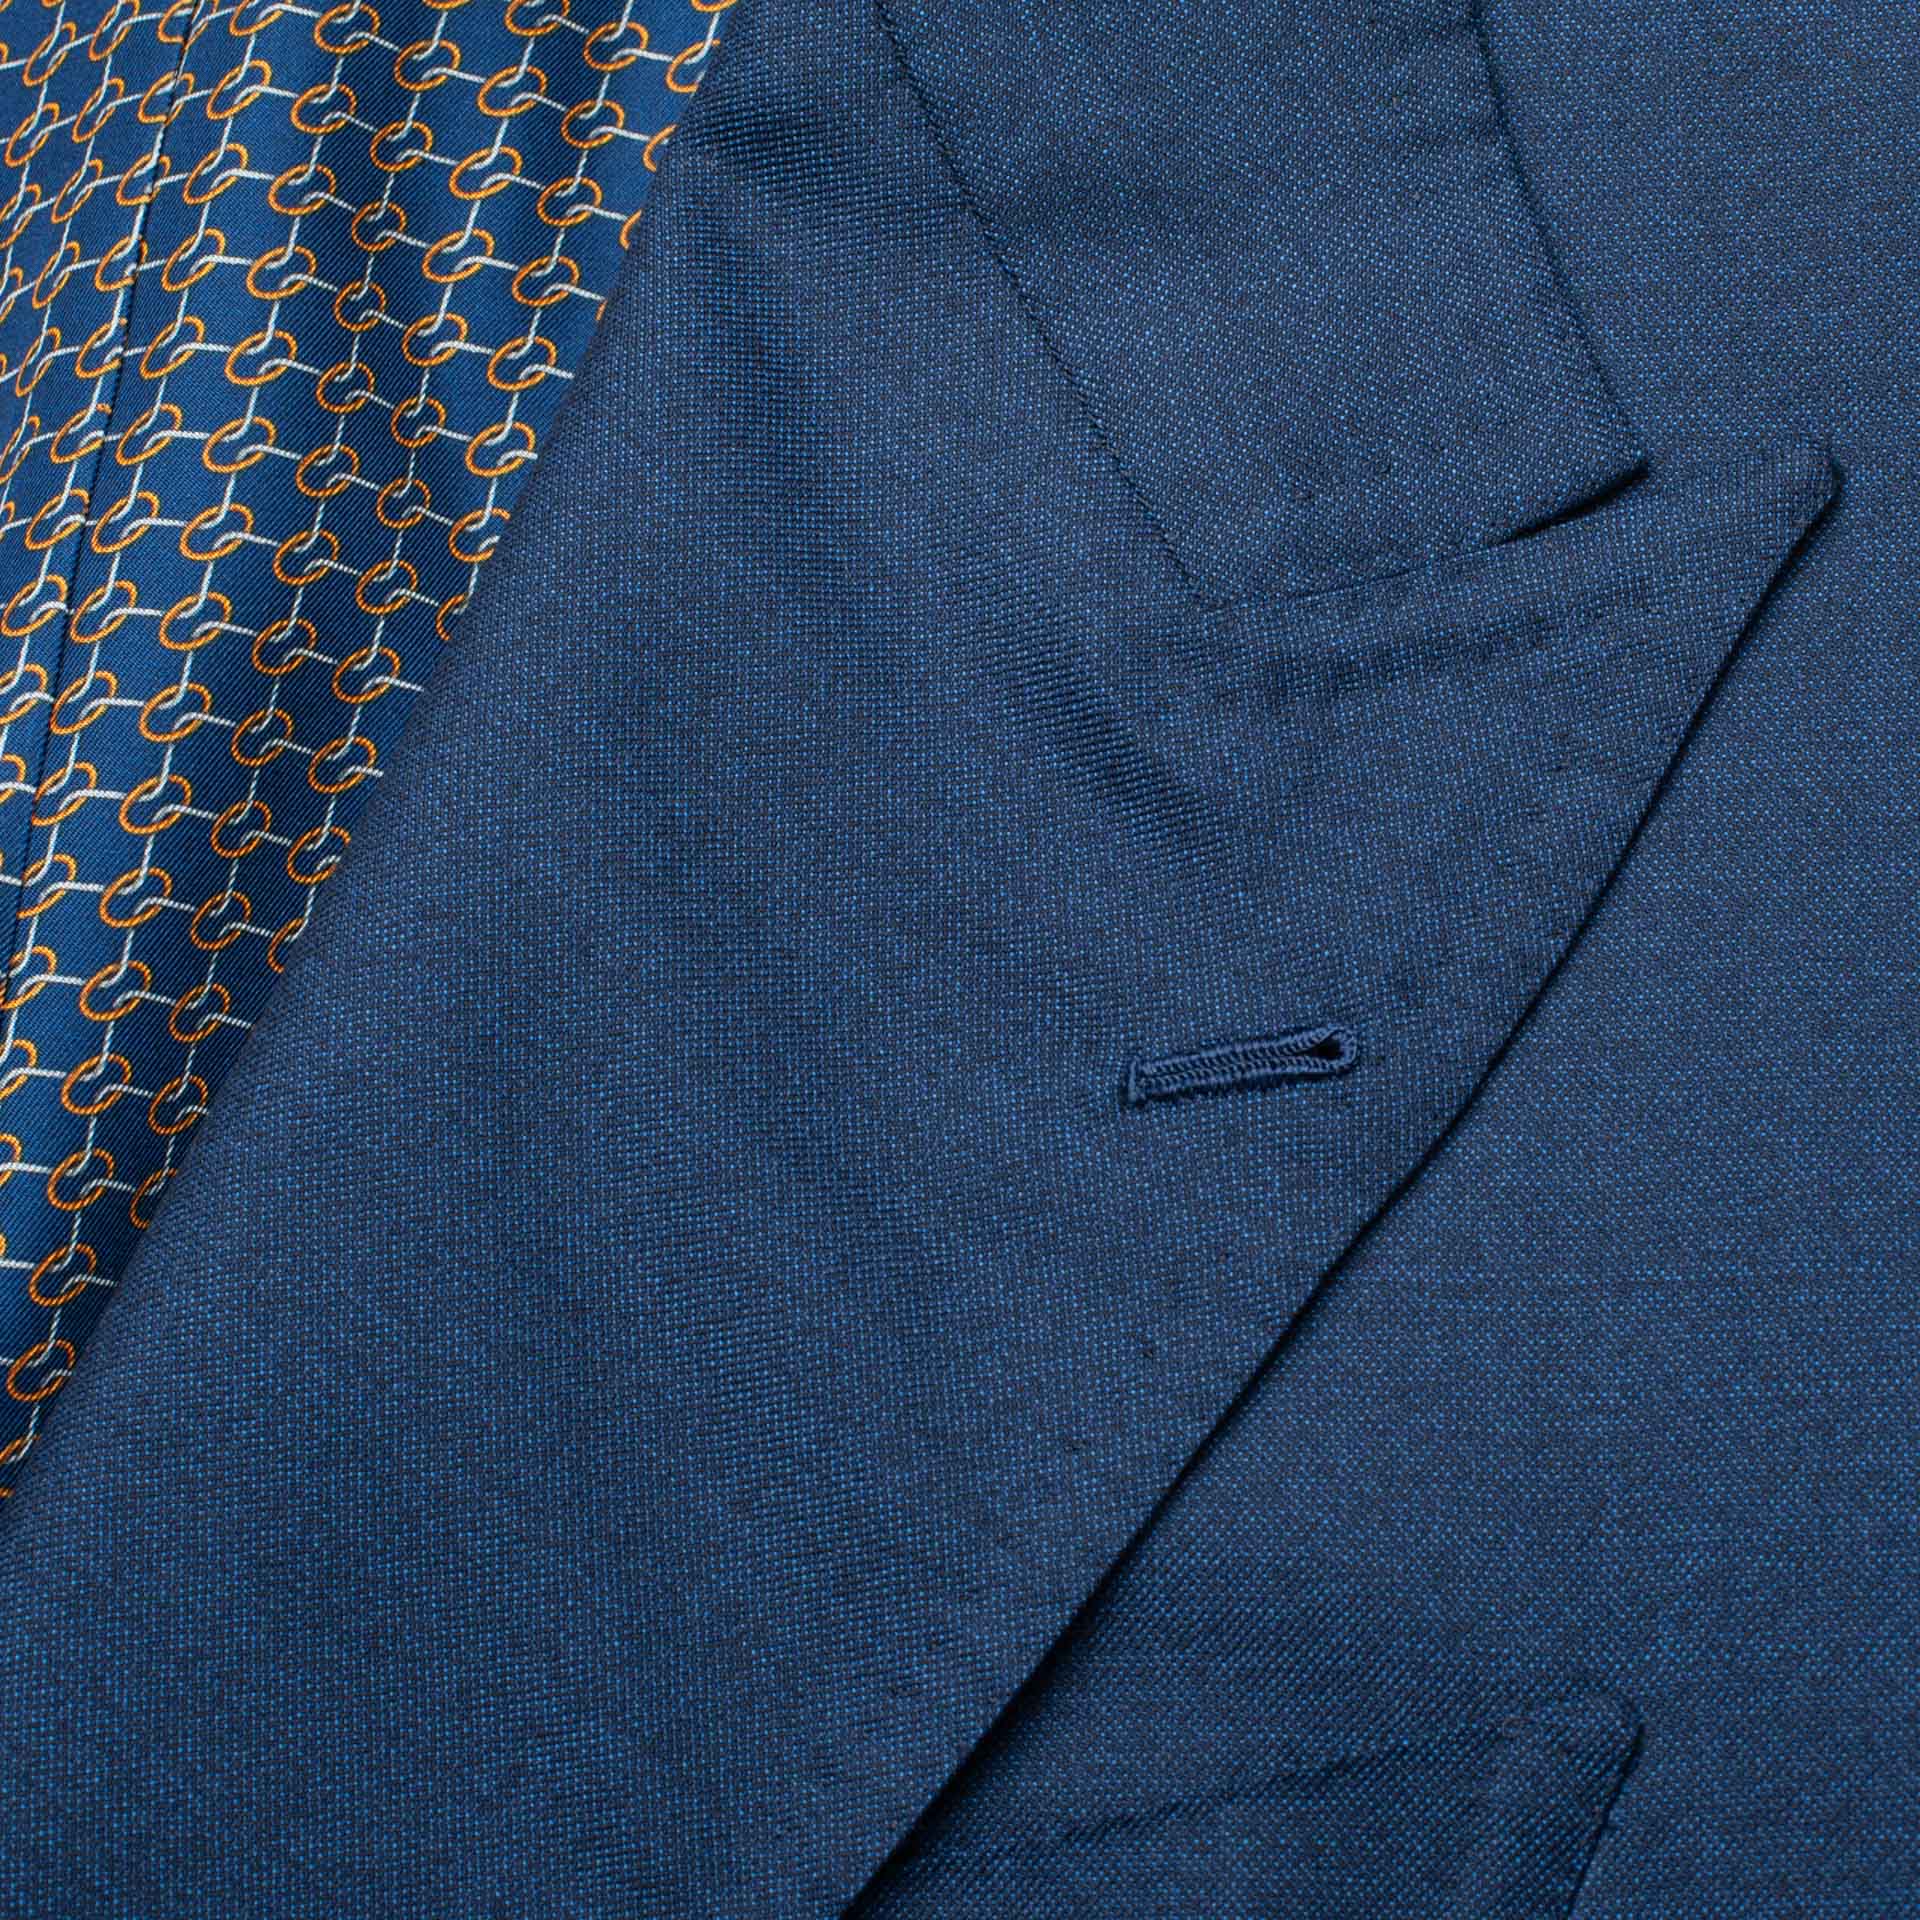 Sartoria CHIAIA Bespoke Handmade Blue Wool DB Suit EU 46 NEW US 36 SARTORIA CHIAIA